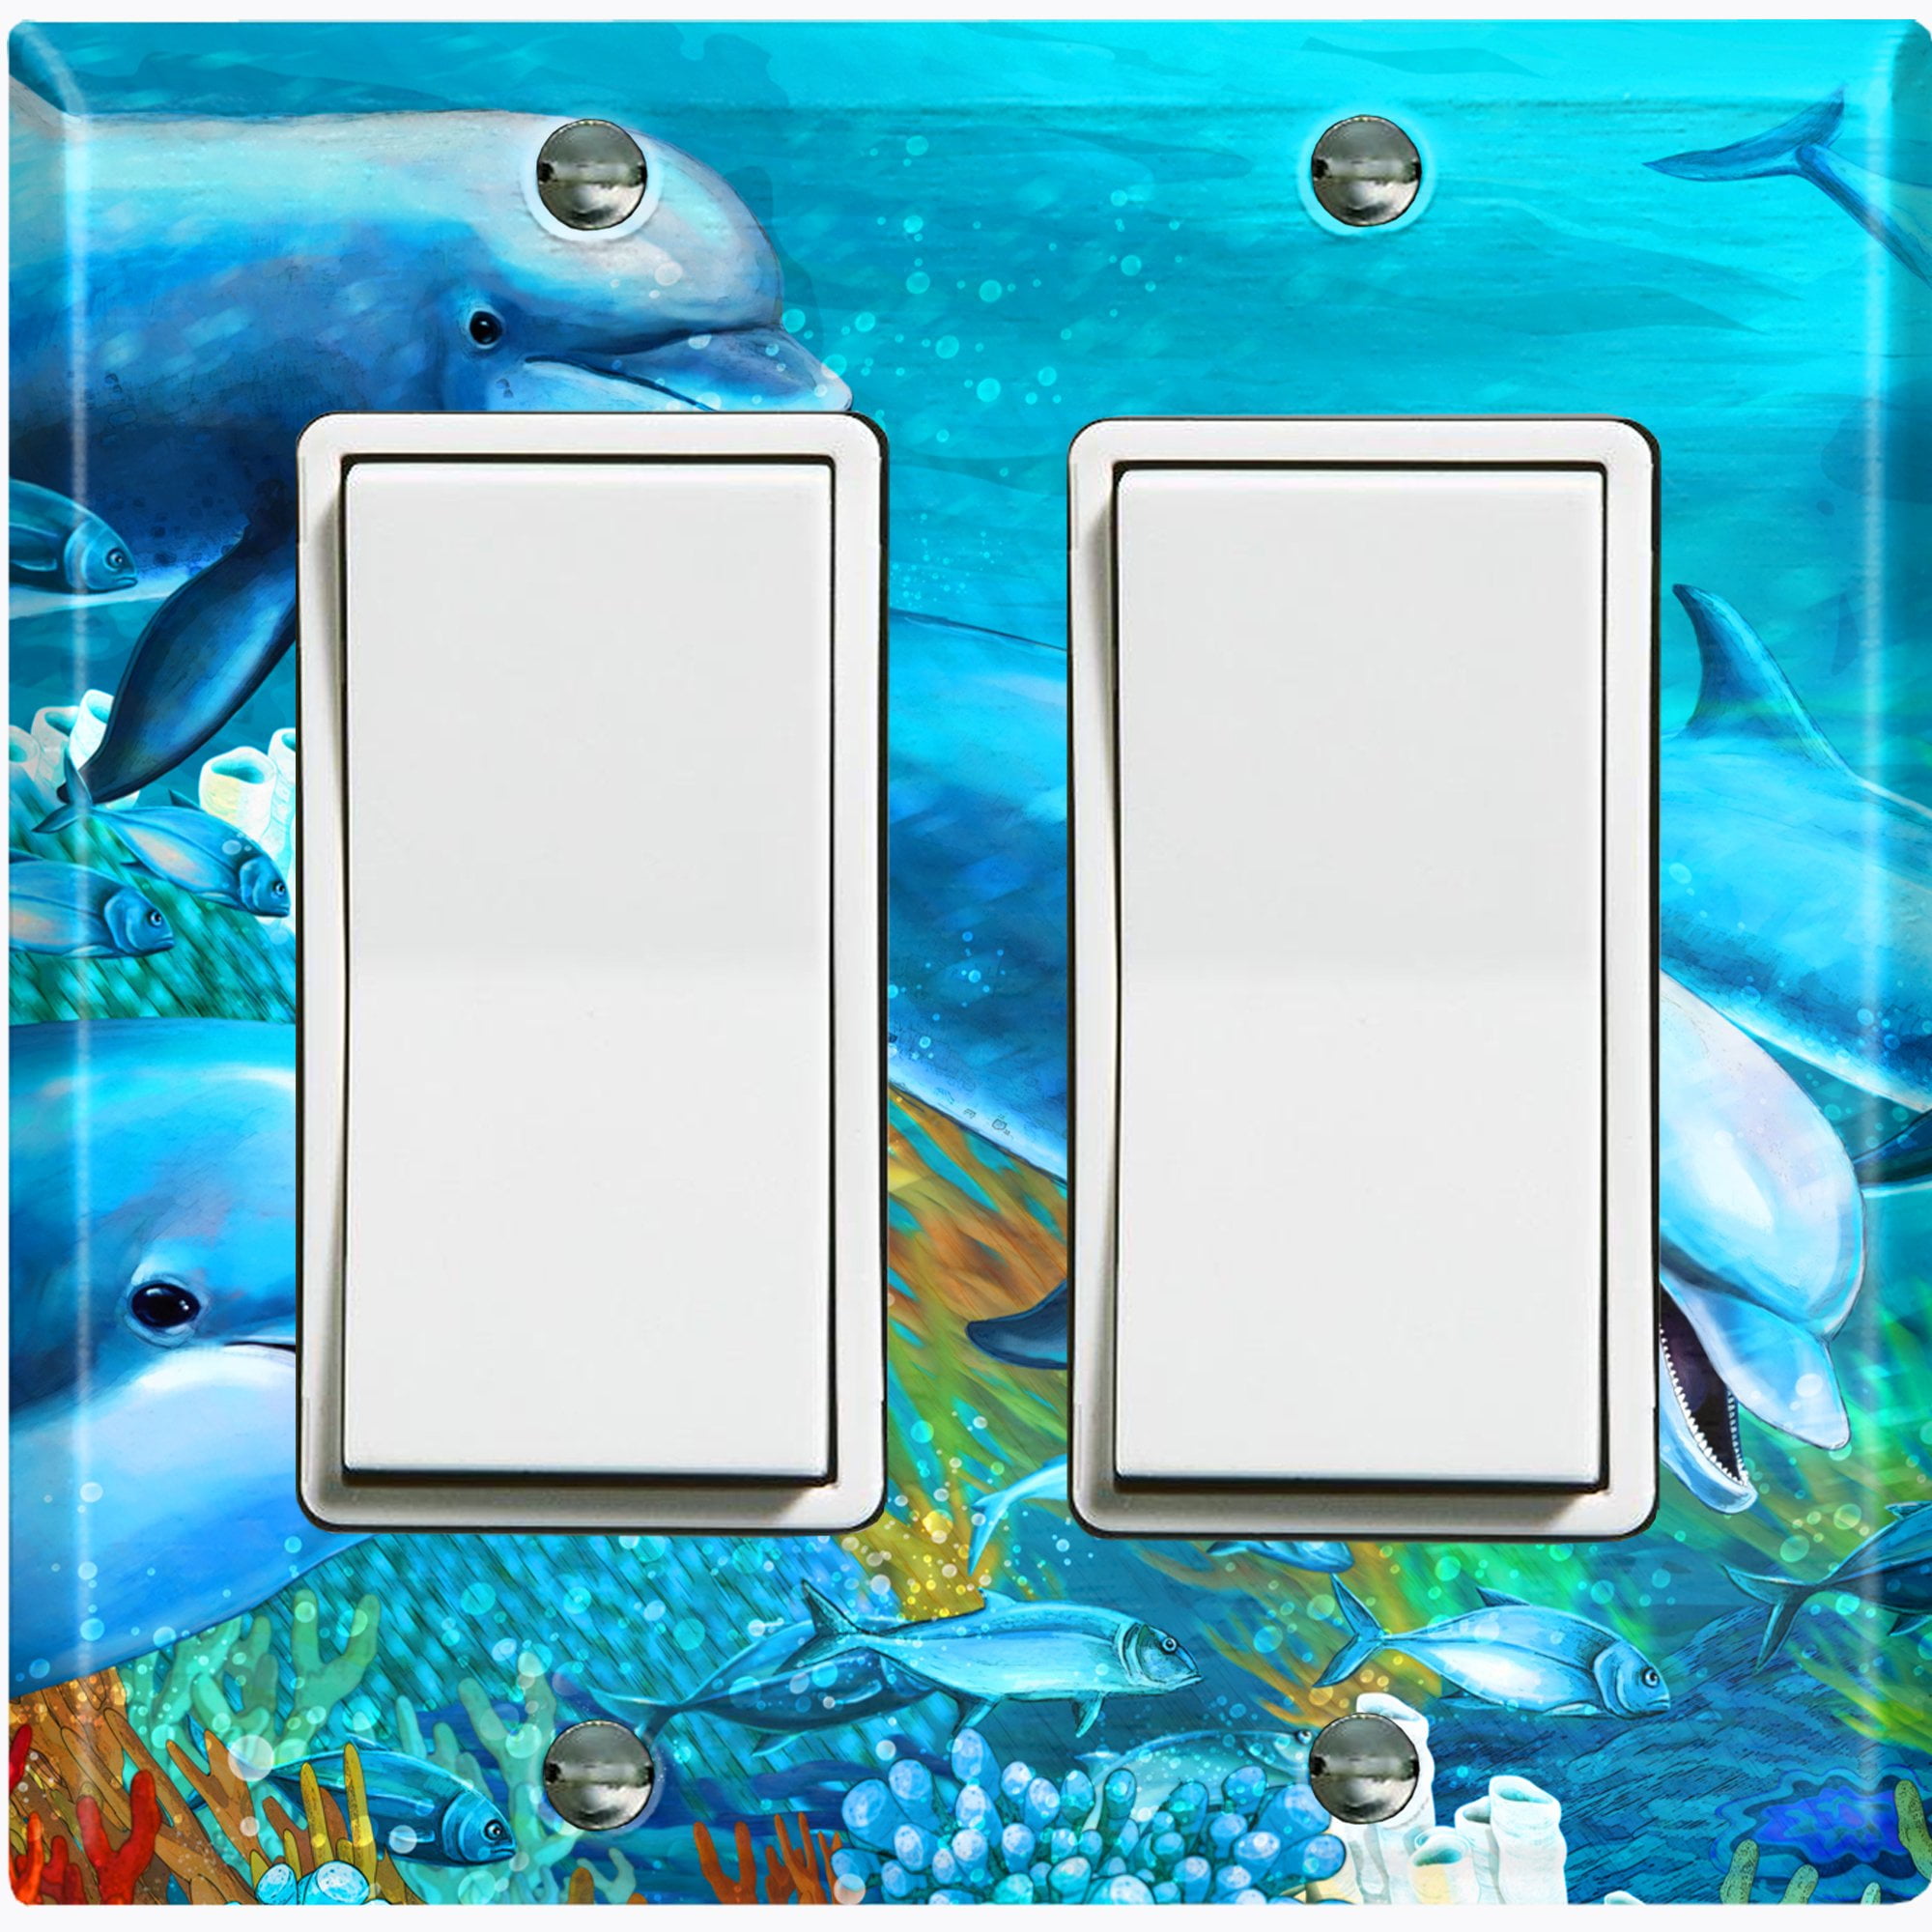 Shell Fishing Net Switch Plate Metal Beach Design Light Switch